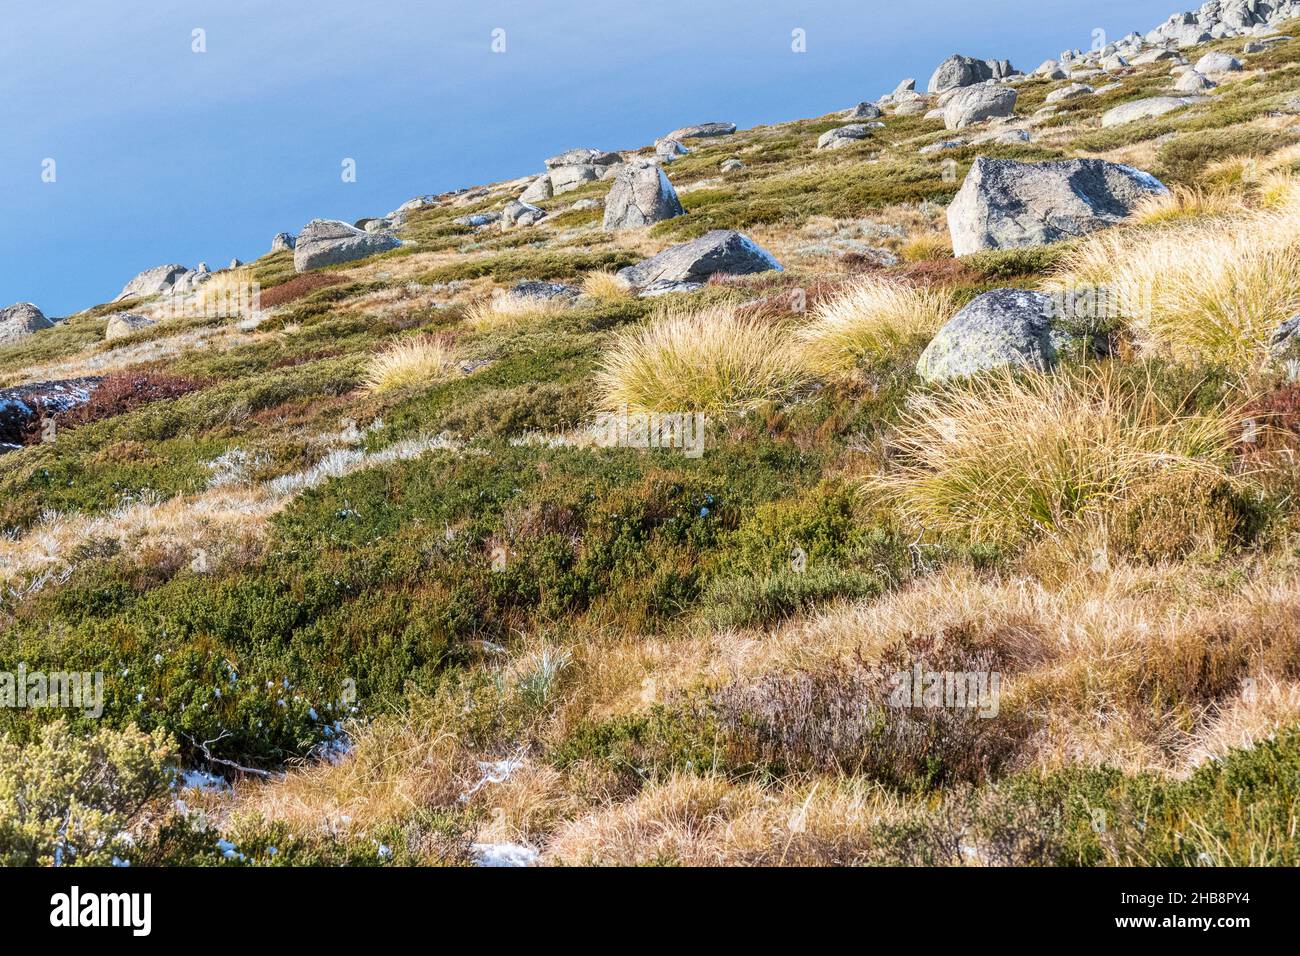 Australia, NSW, Kosciuszko National Park, Rocks on grassy hill Stock Photo